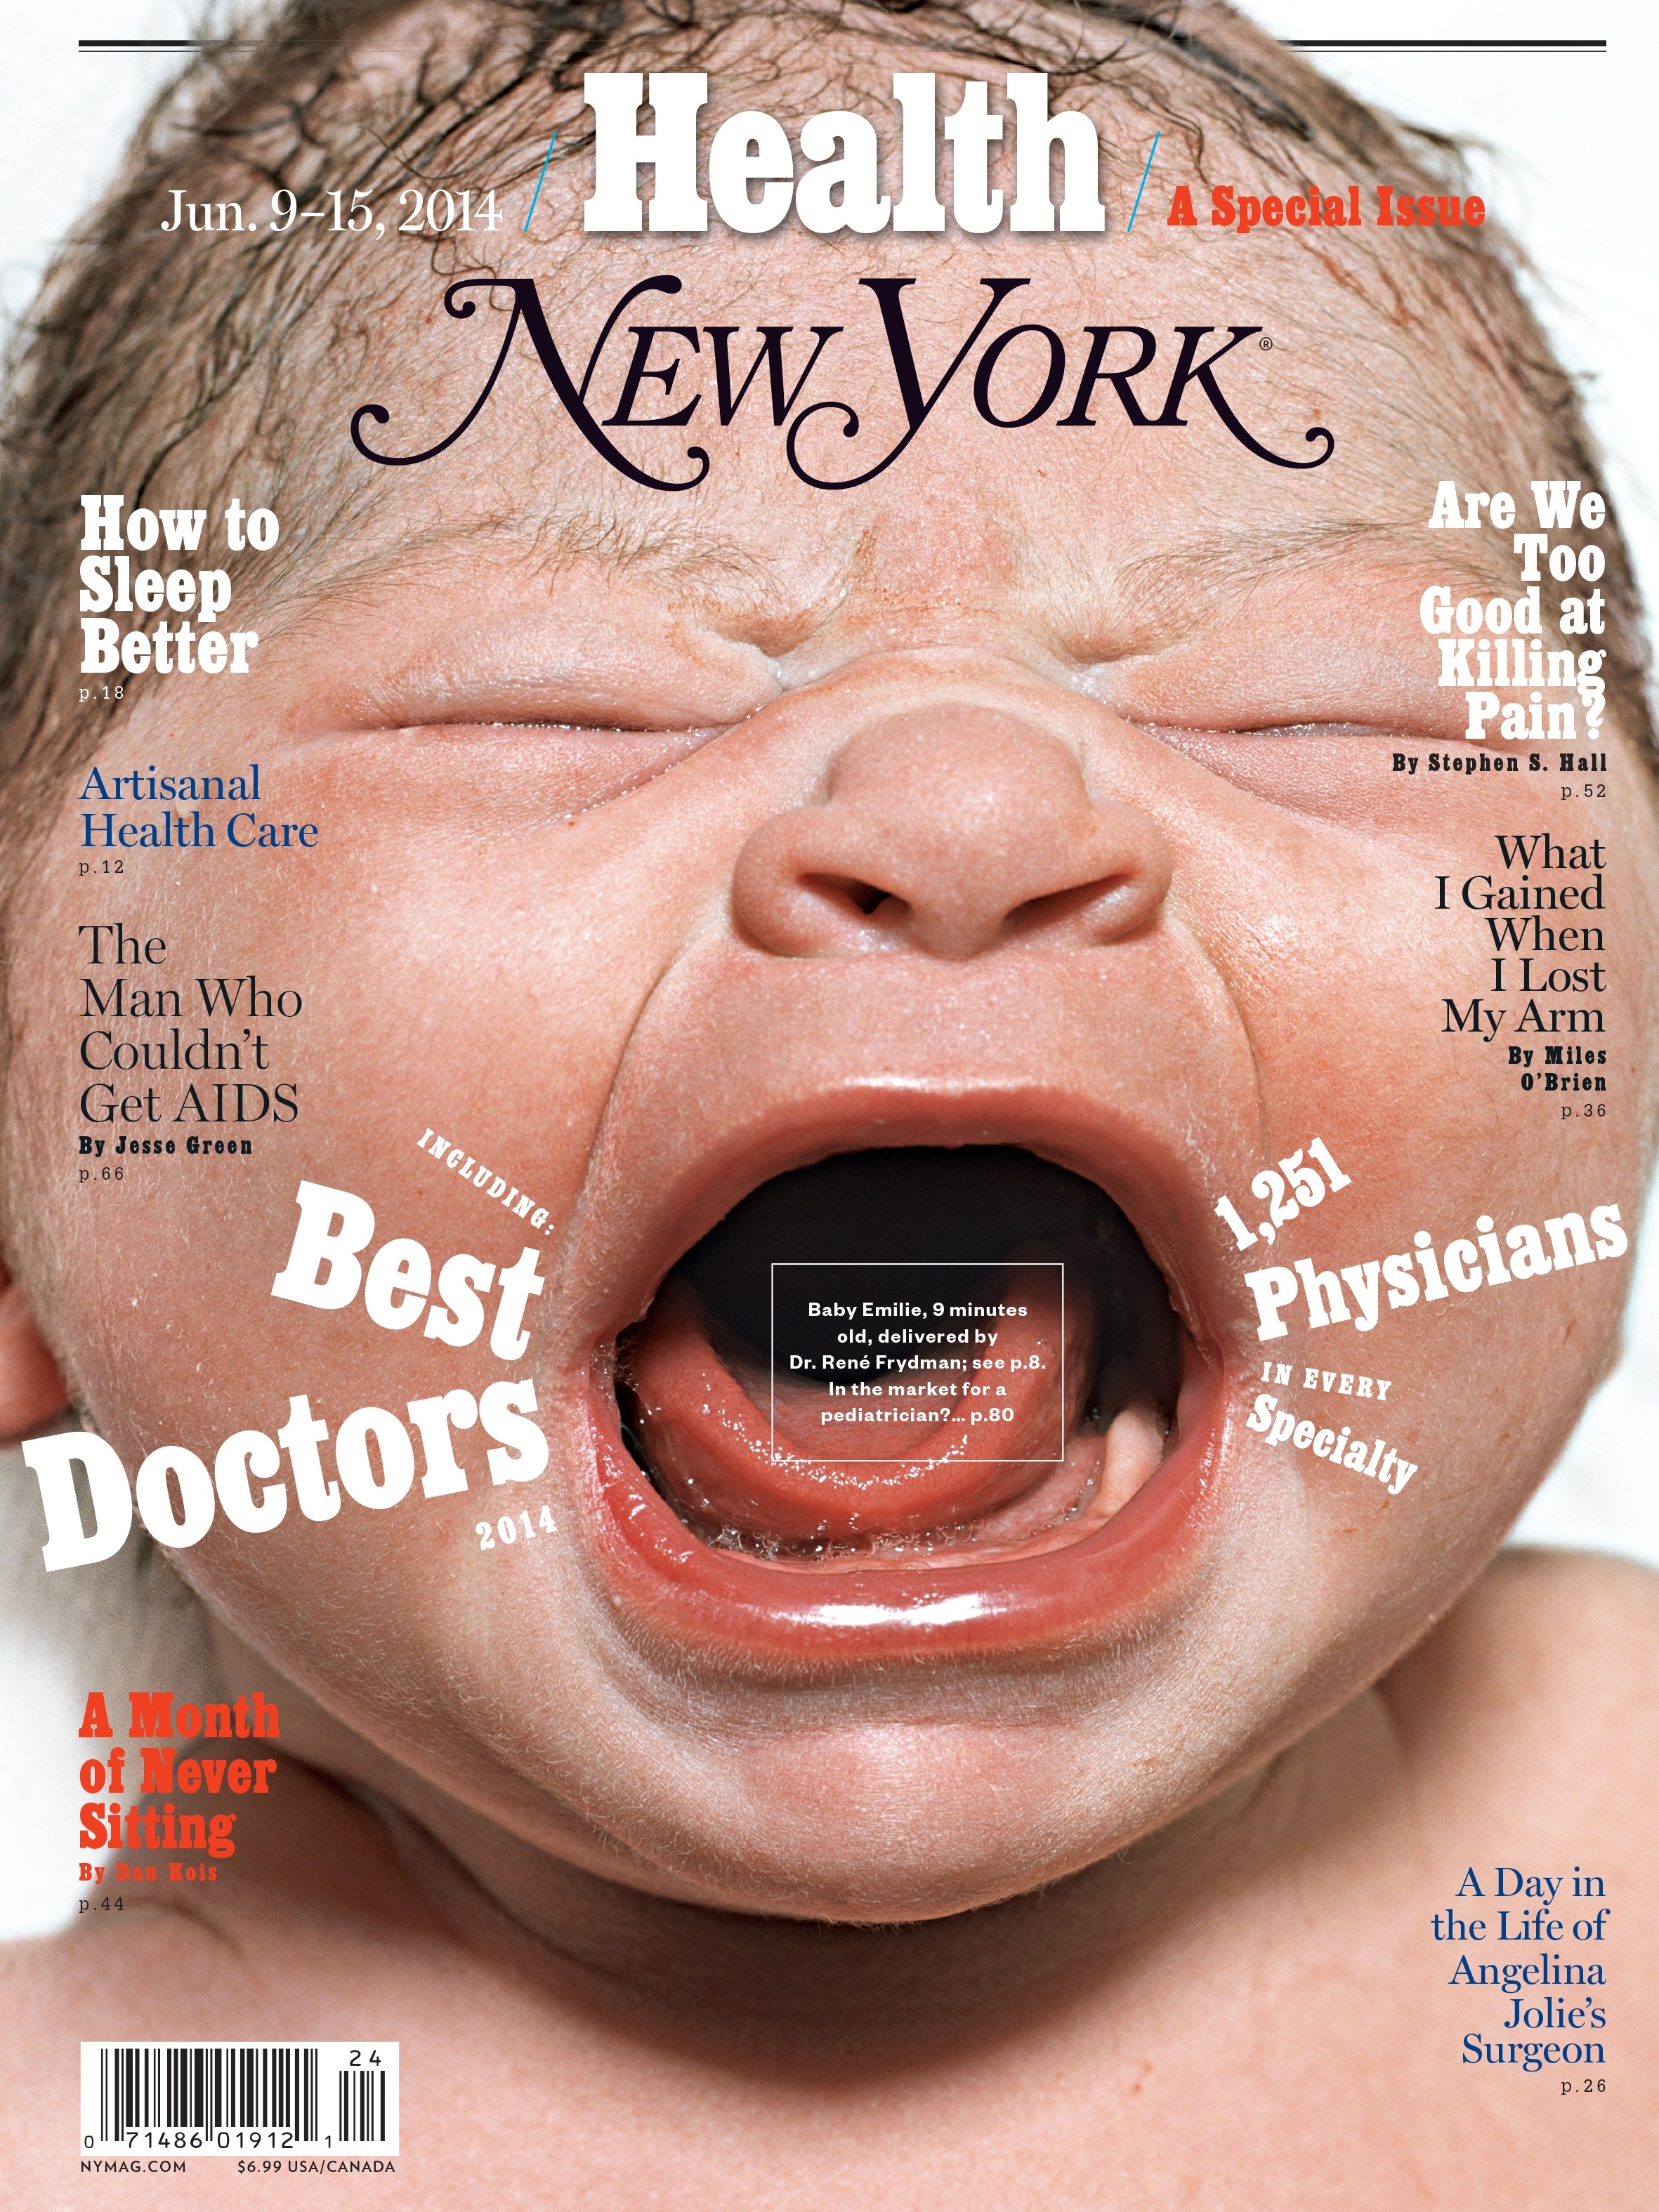 New York-June 9-15, 2014, "Health"